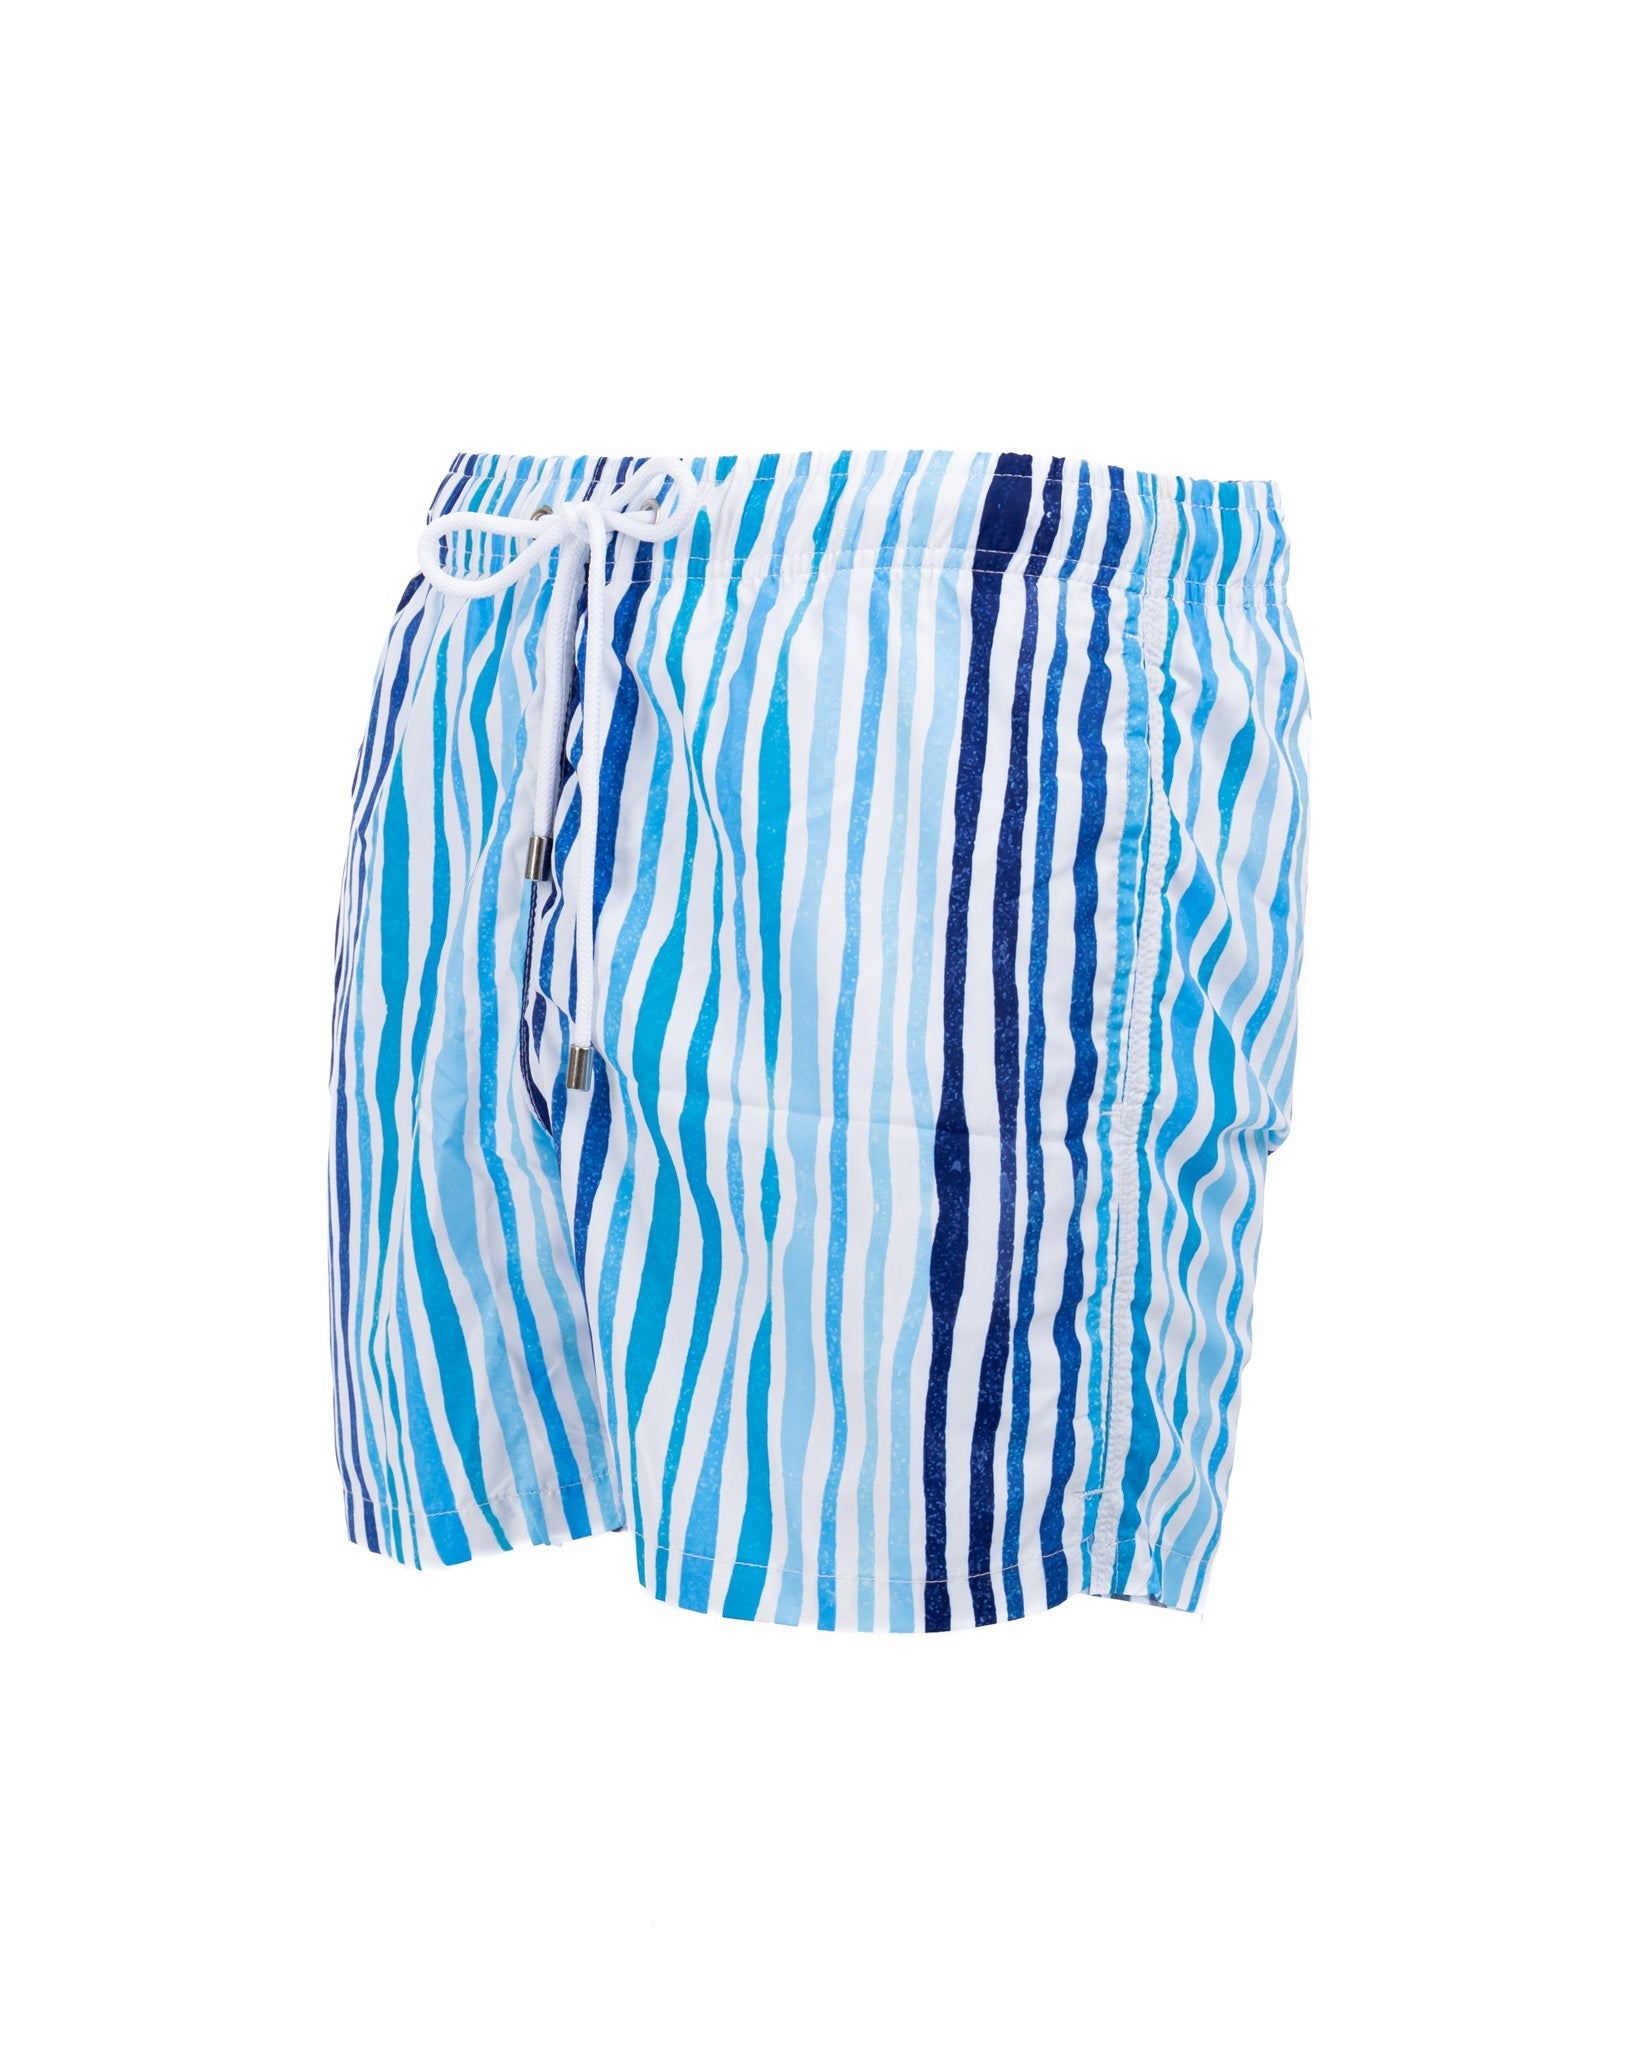 Stripe - light blue patterned swimsuit